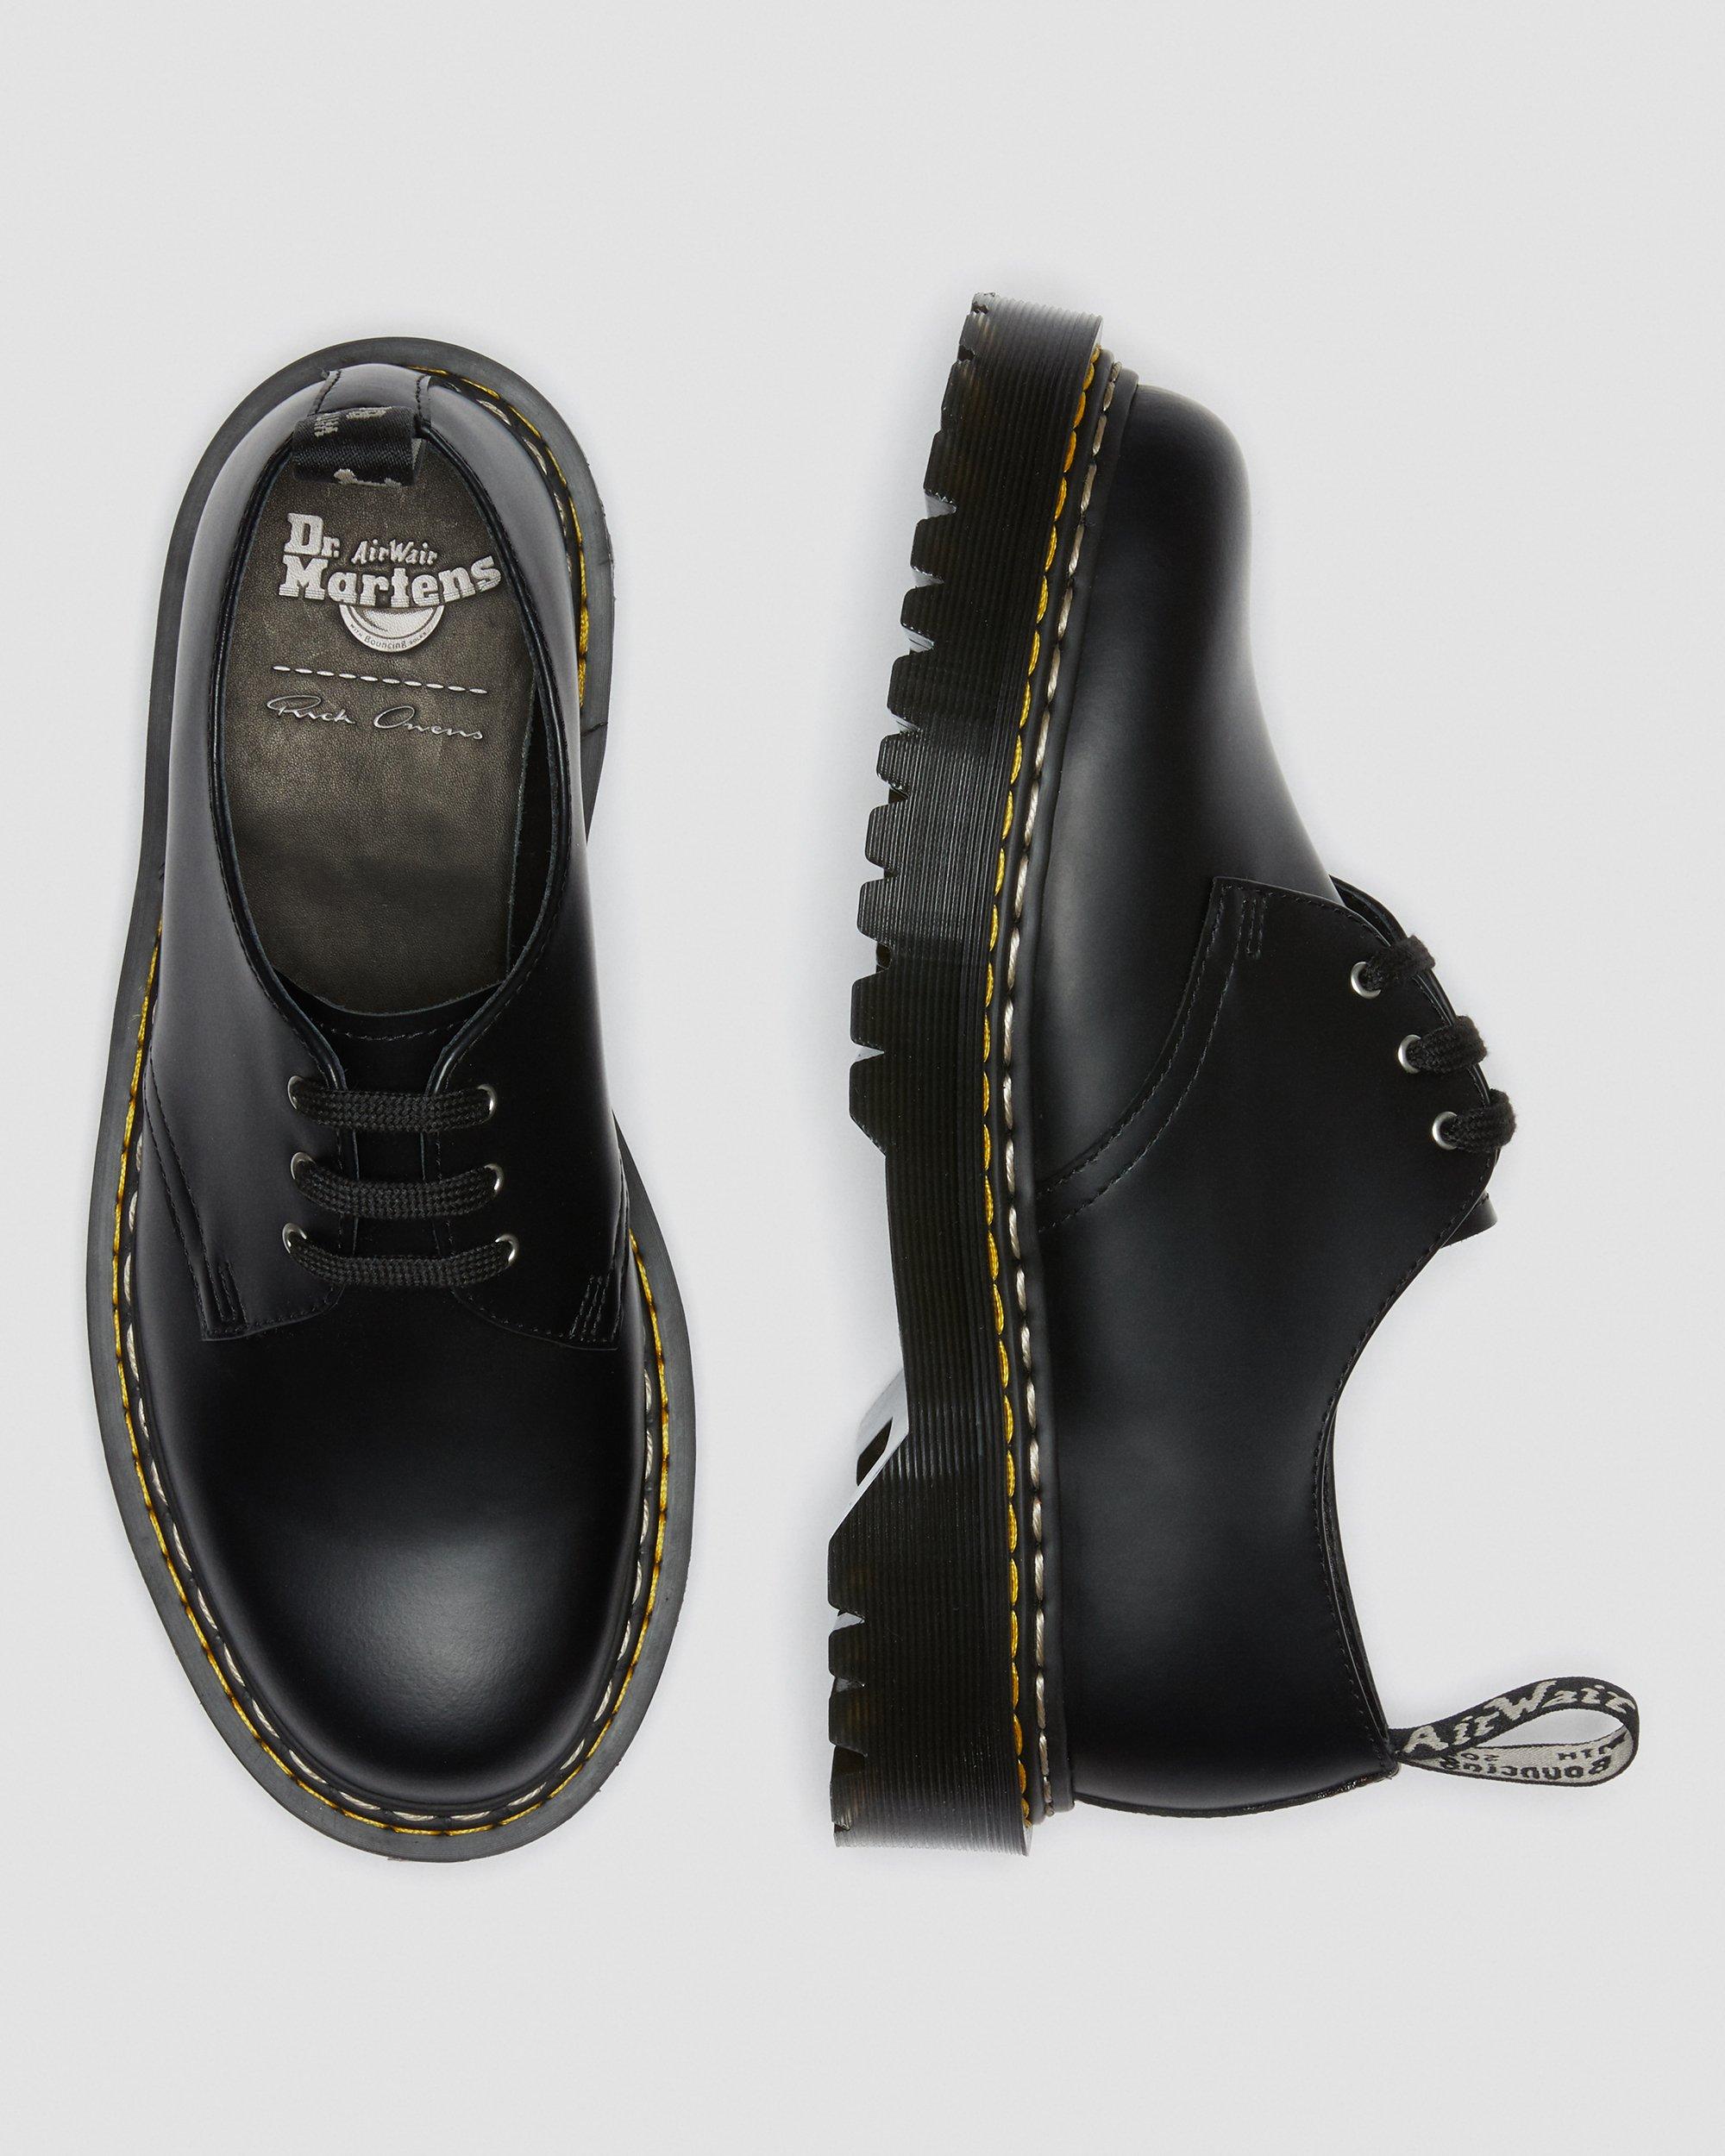 DR MARTENS 1461 Rick Owens Bex Leather Oxford Shoes